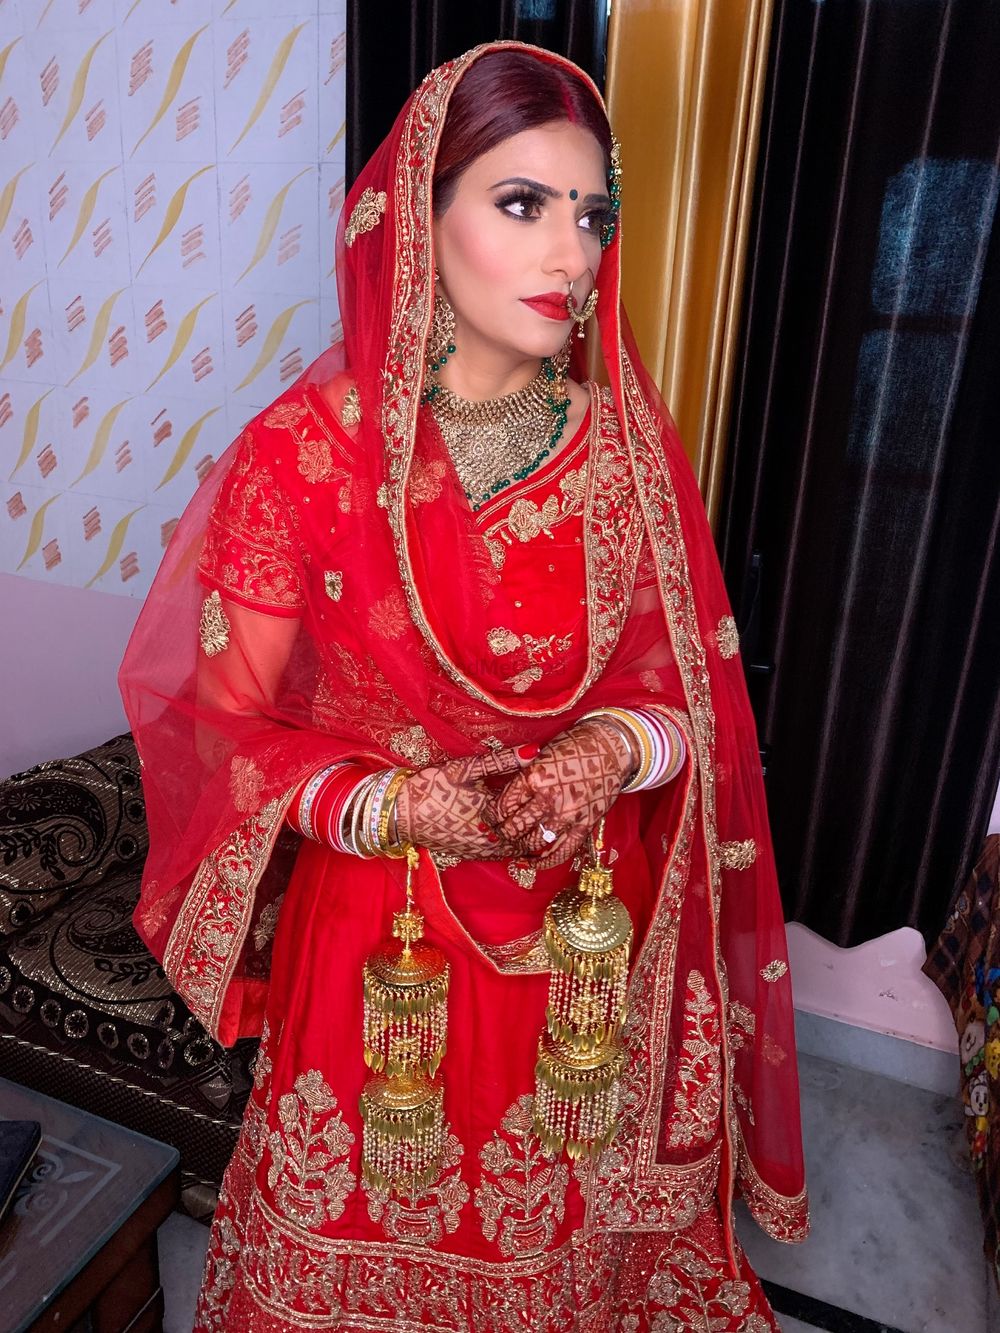 Photo From Pawan Bridal & reception makeup  - By Sheena Sindhi Makeup Artist